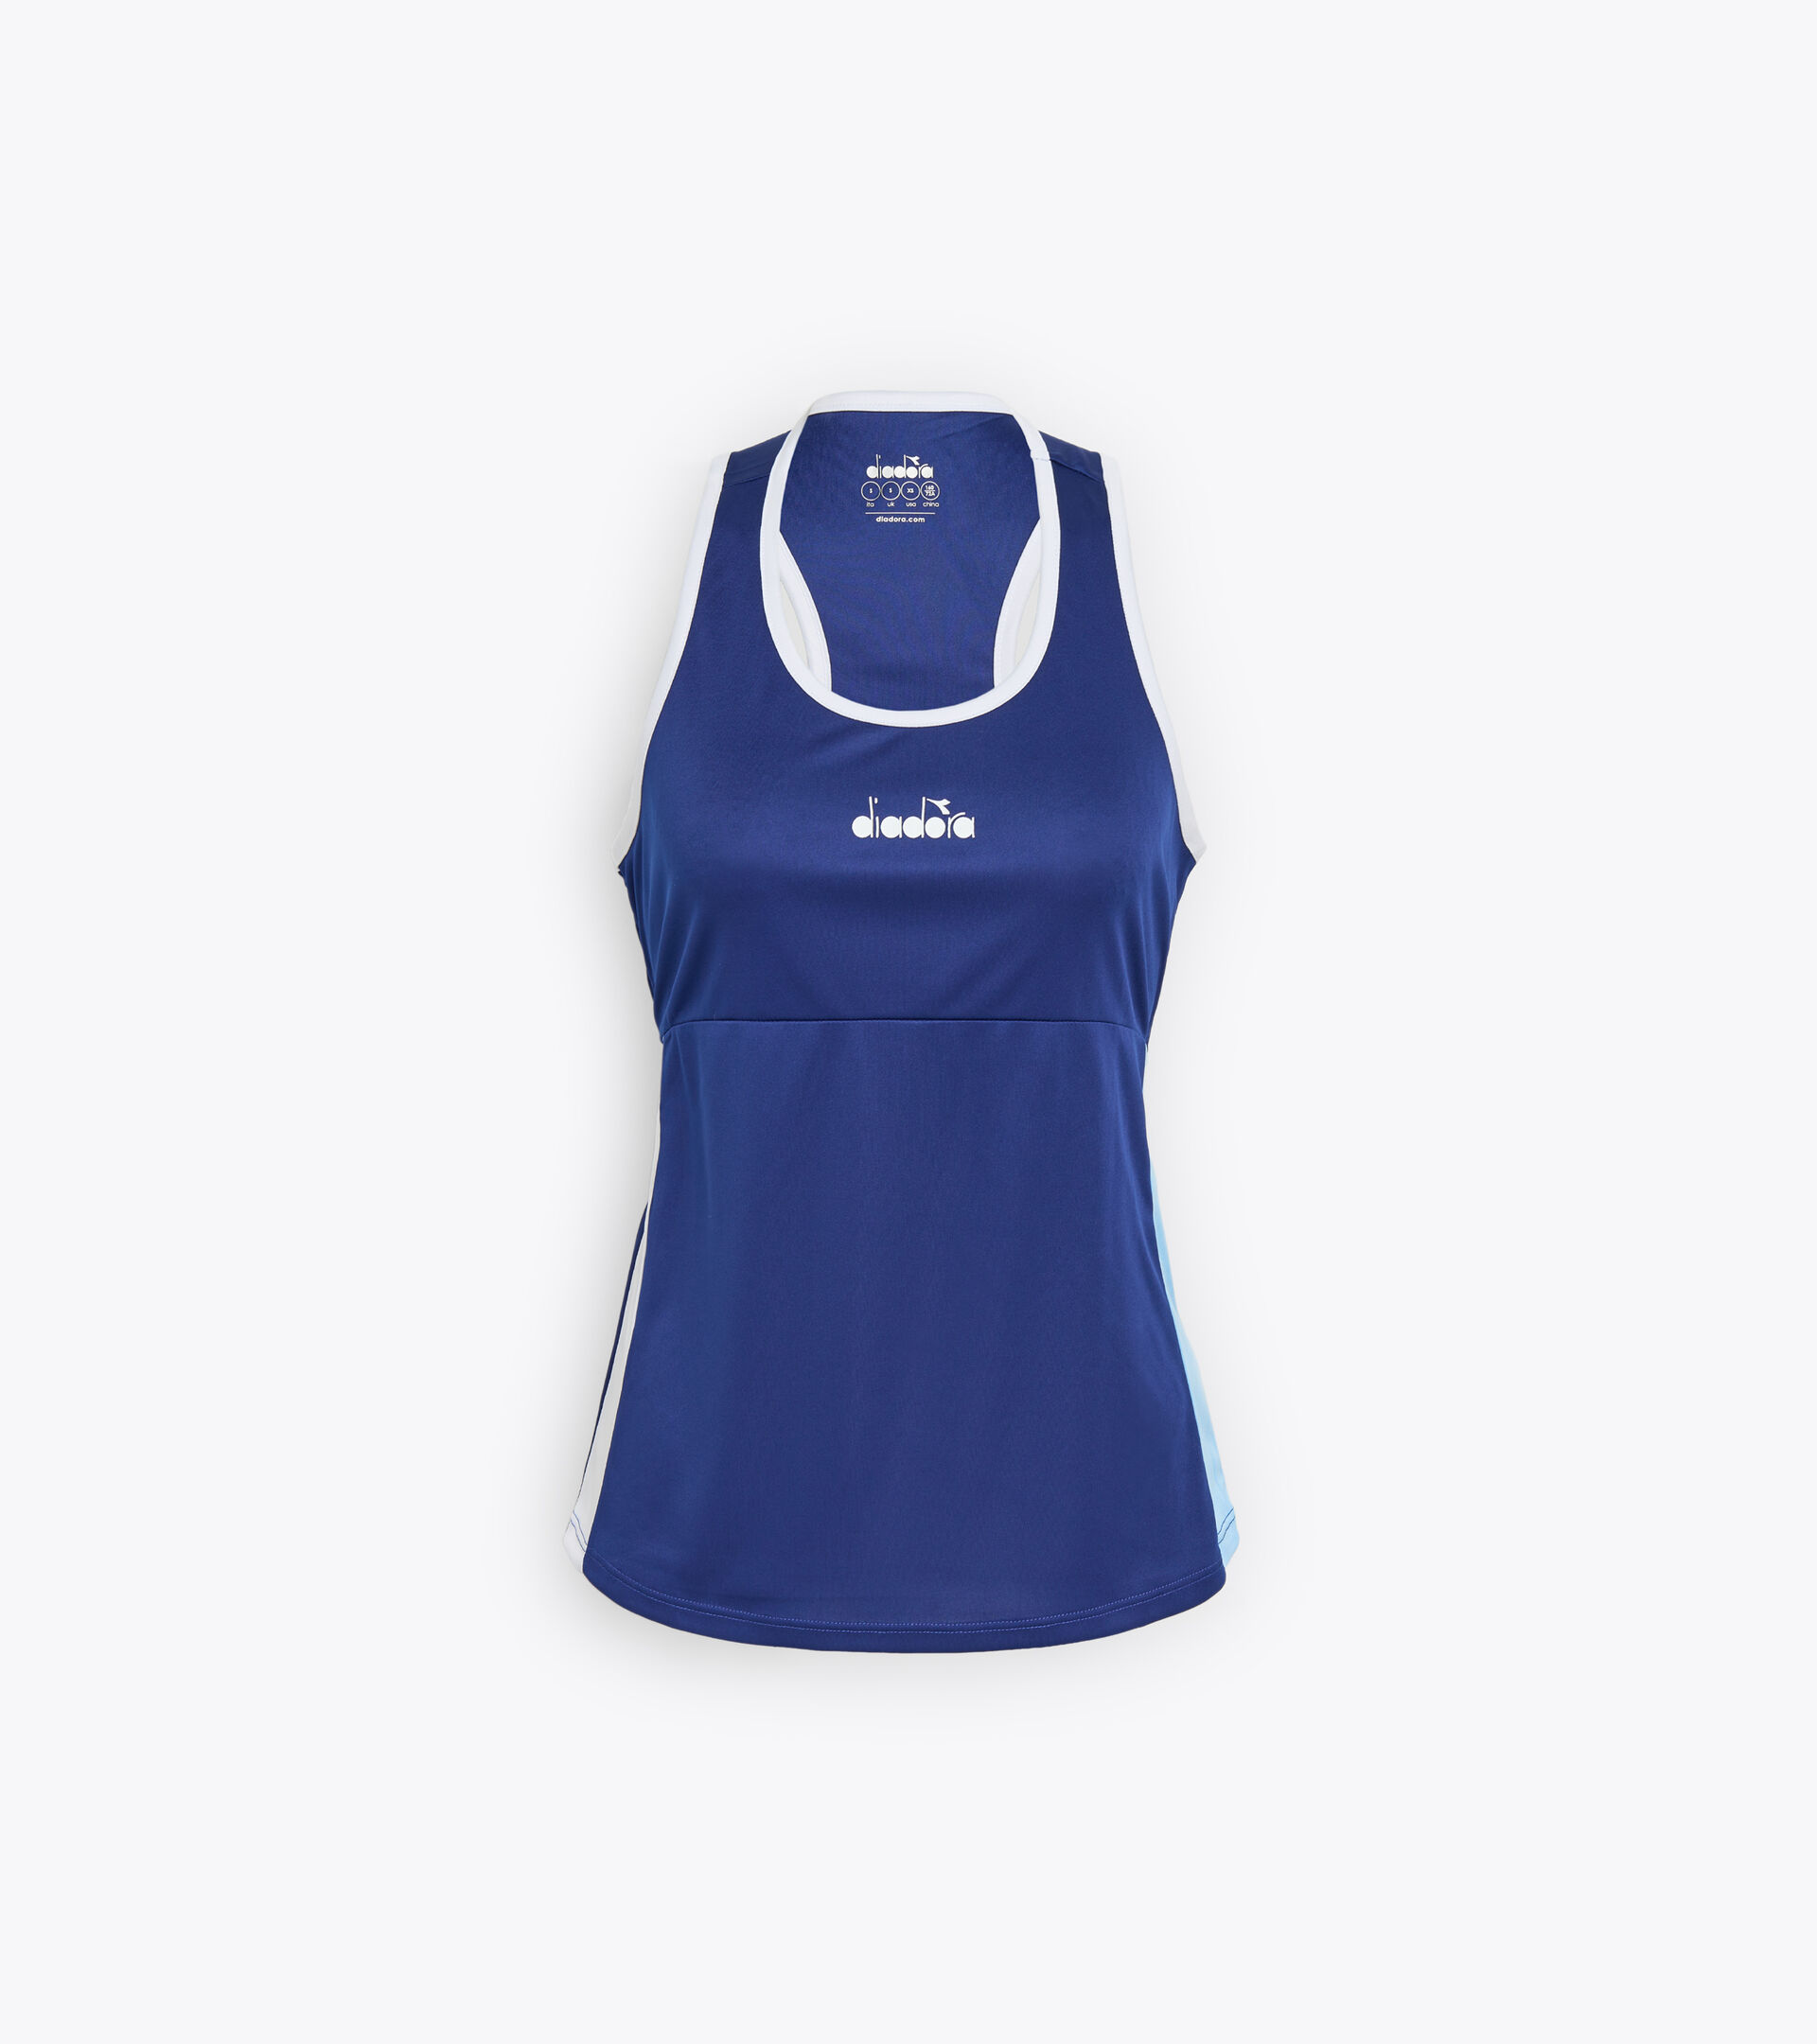 Camiseta sin mangas para correr - Mujer L. CORE TANK CIANOTIPO AZUL - Diadora